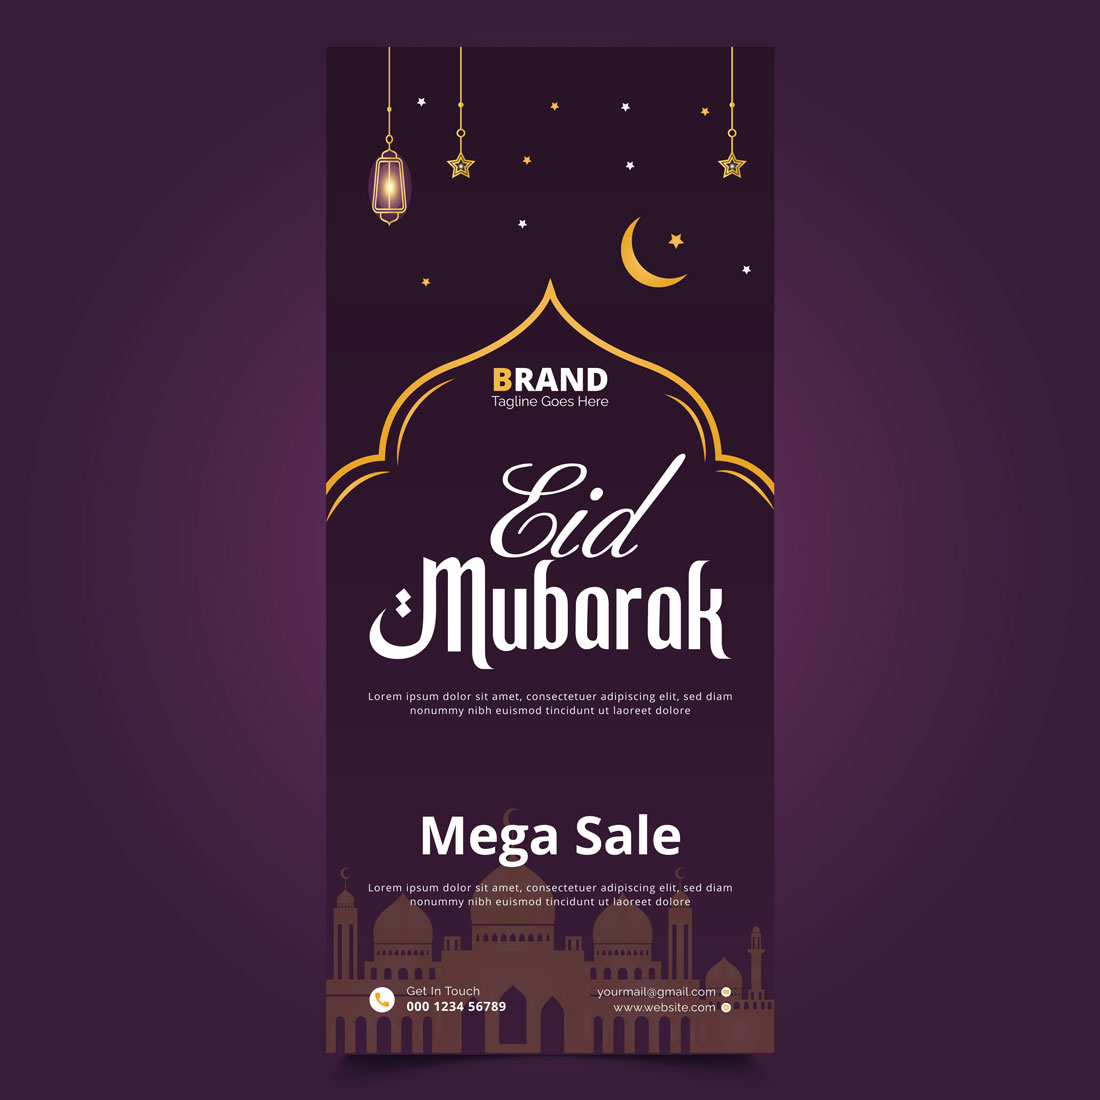 Eid Mubarak Rollup Banner Bundle cover image.